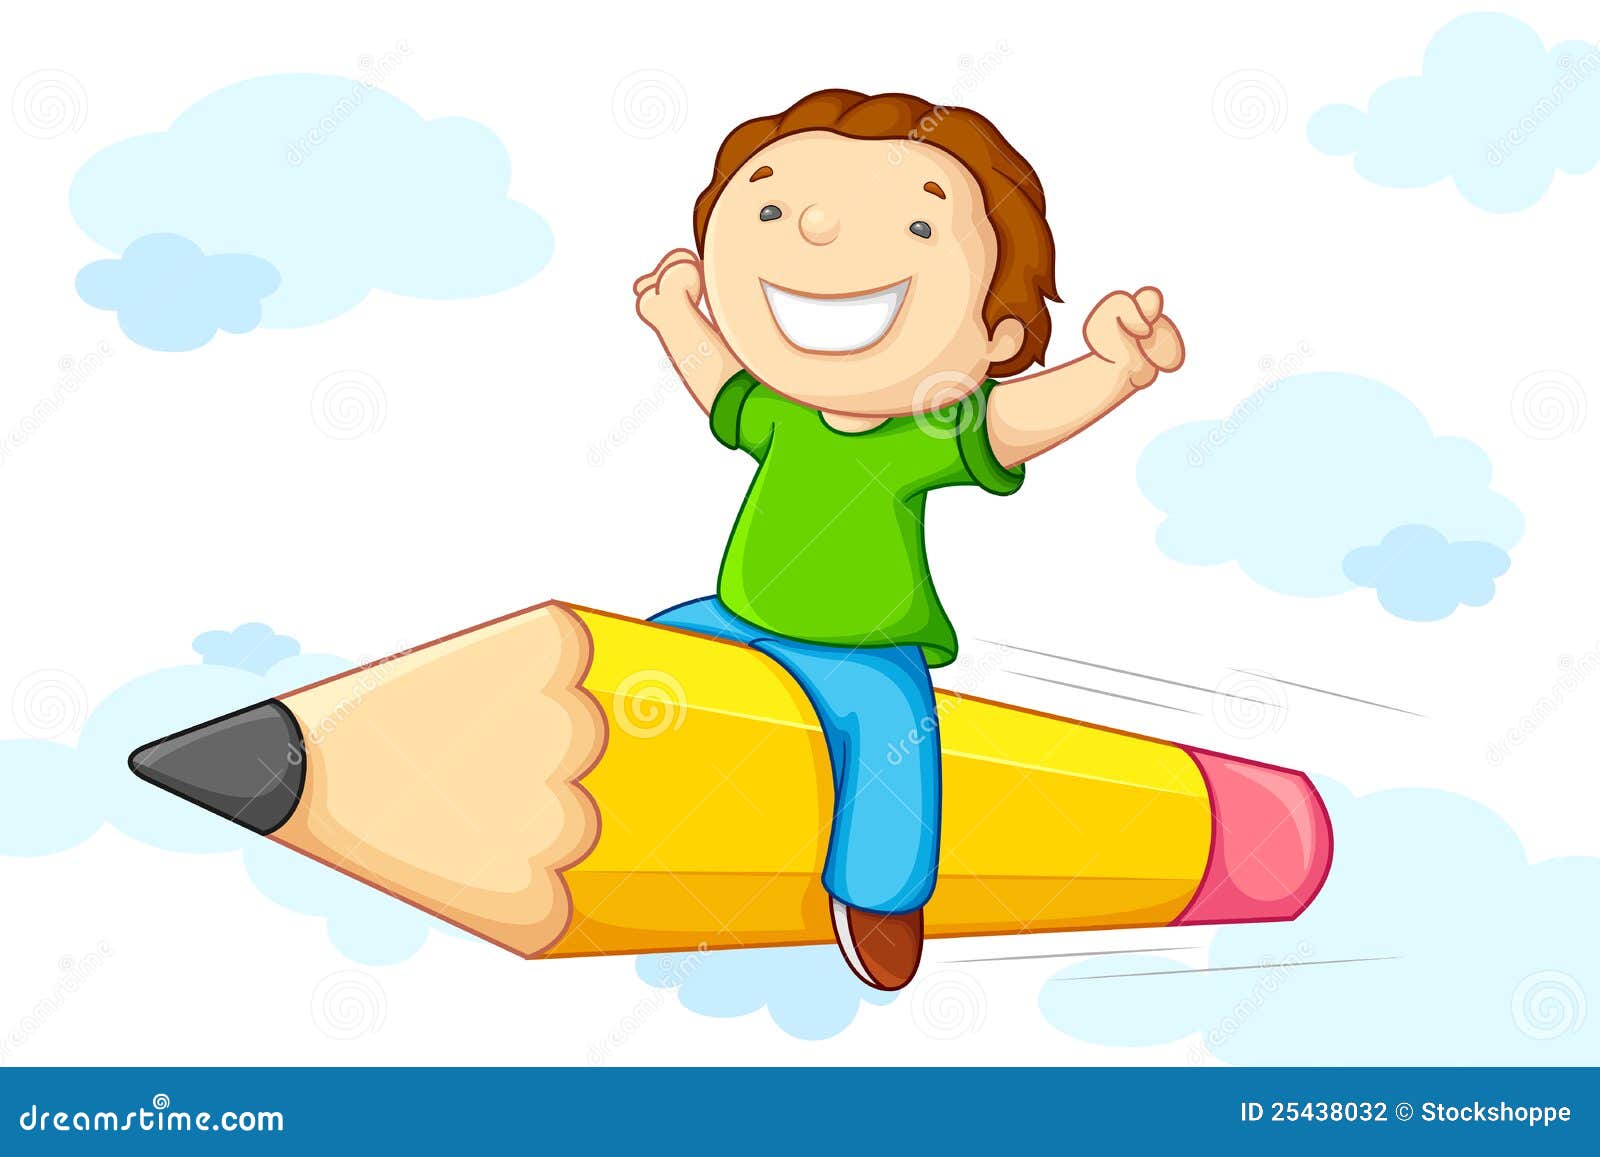 kid flying on pencil